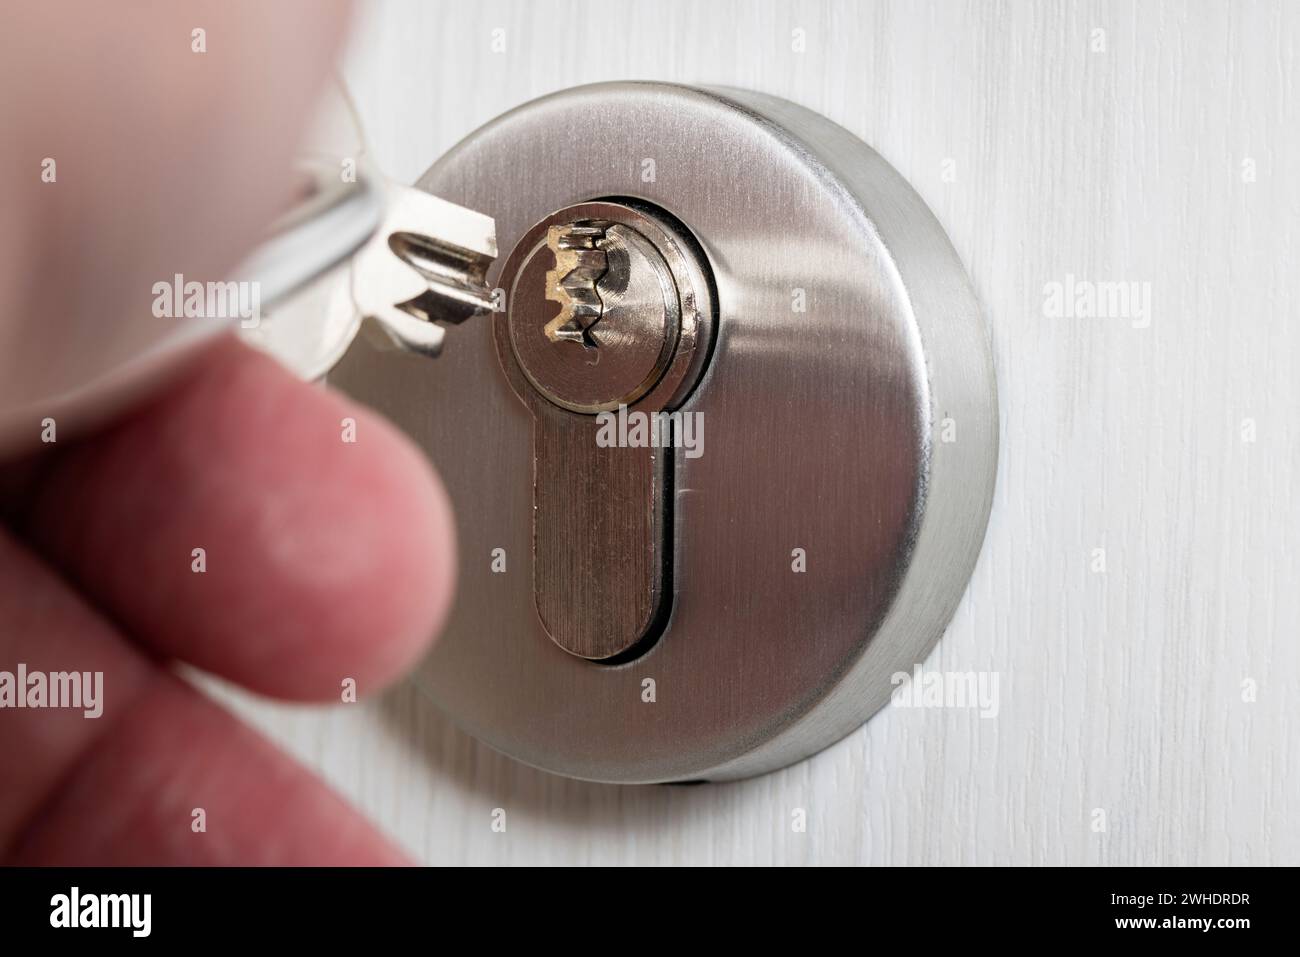 Man's hand holding a broken cylinder key, broken key bit protruding from the cylinder lock, detail, symbolic image, broken apartment key, Stock Photo